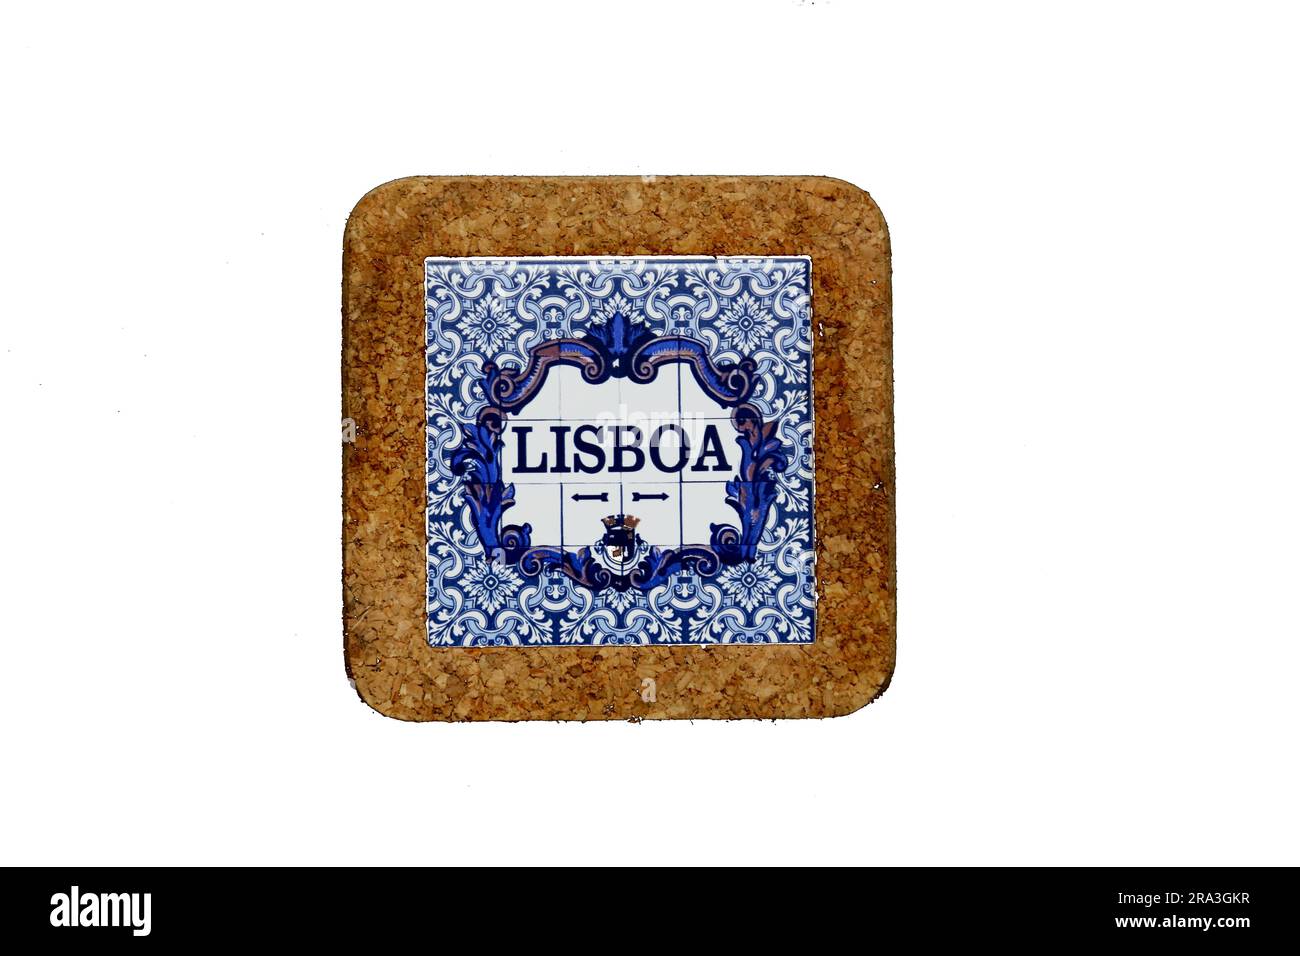 lisbon portugal coaster tile souvenir on black background isolated macro detail azulejo Stock Photo